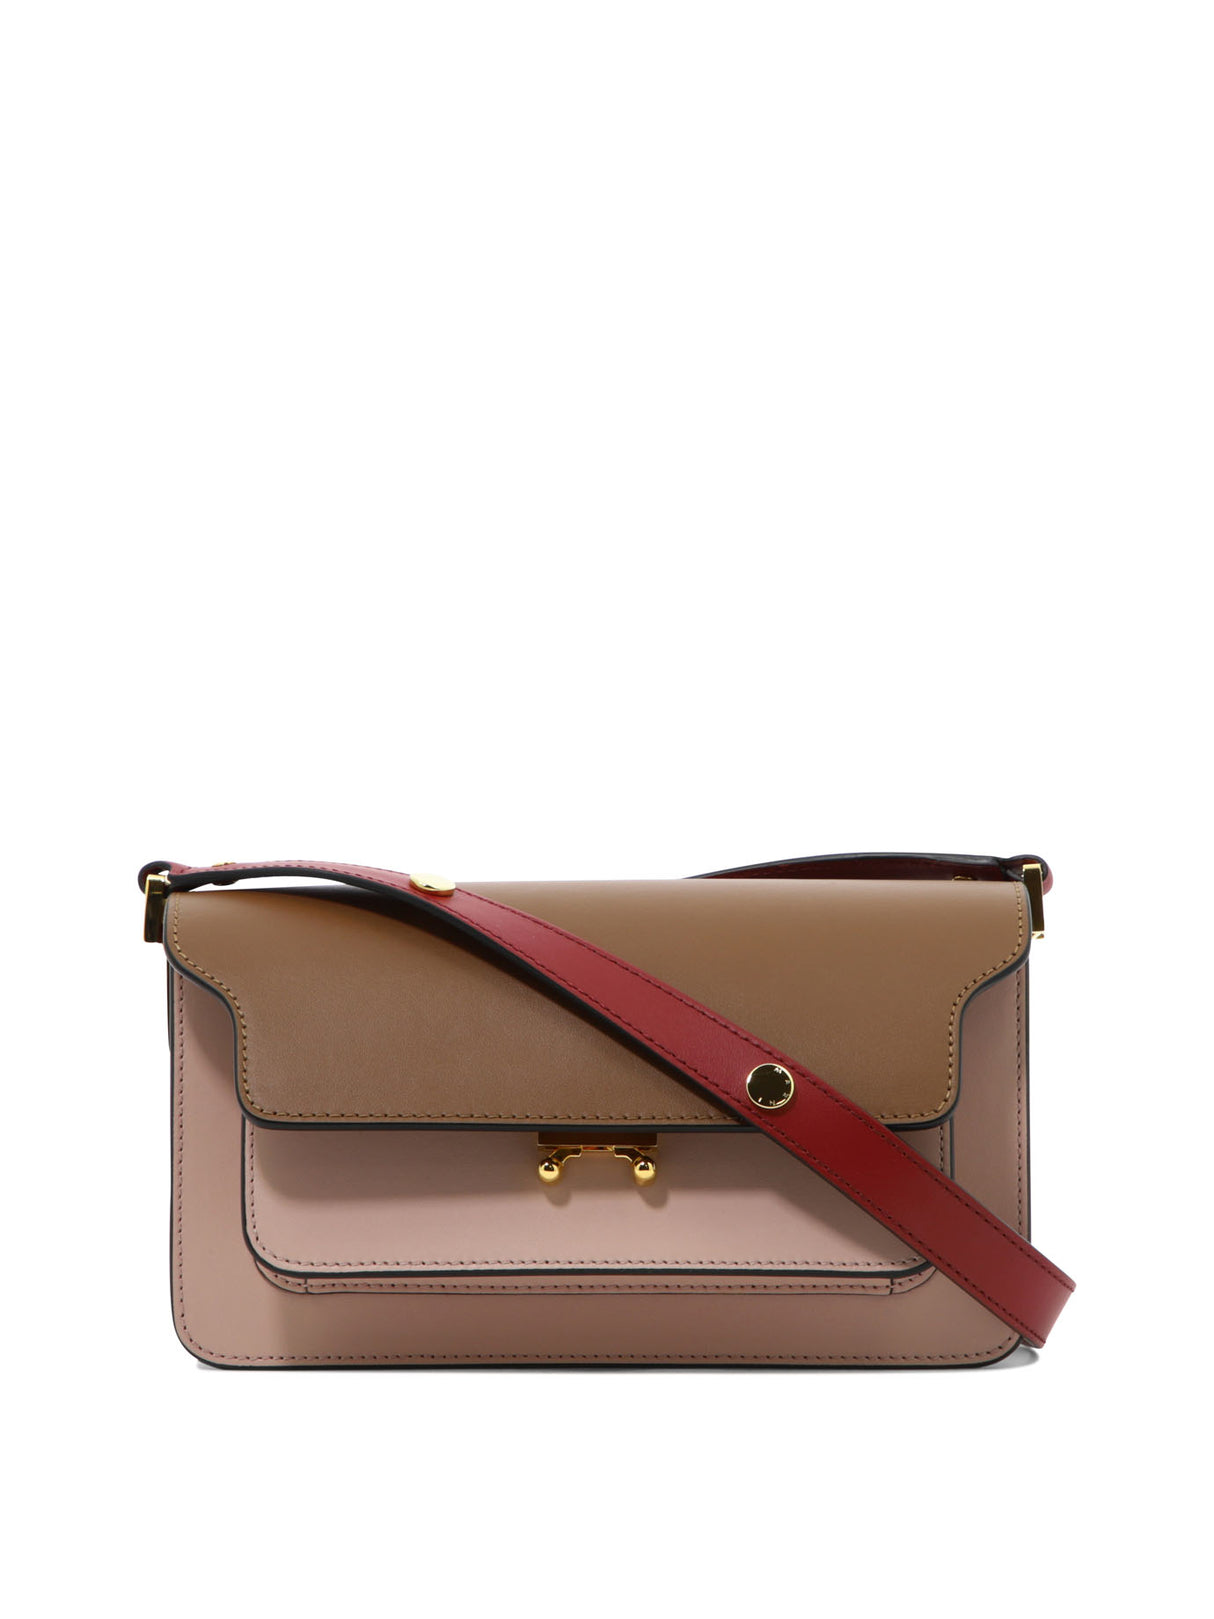 MARNI Brown Leather Crossbody Bag for Women